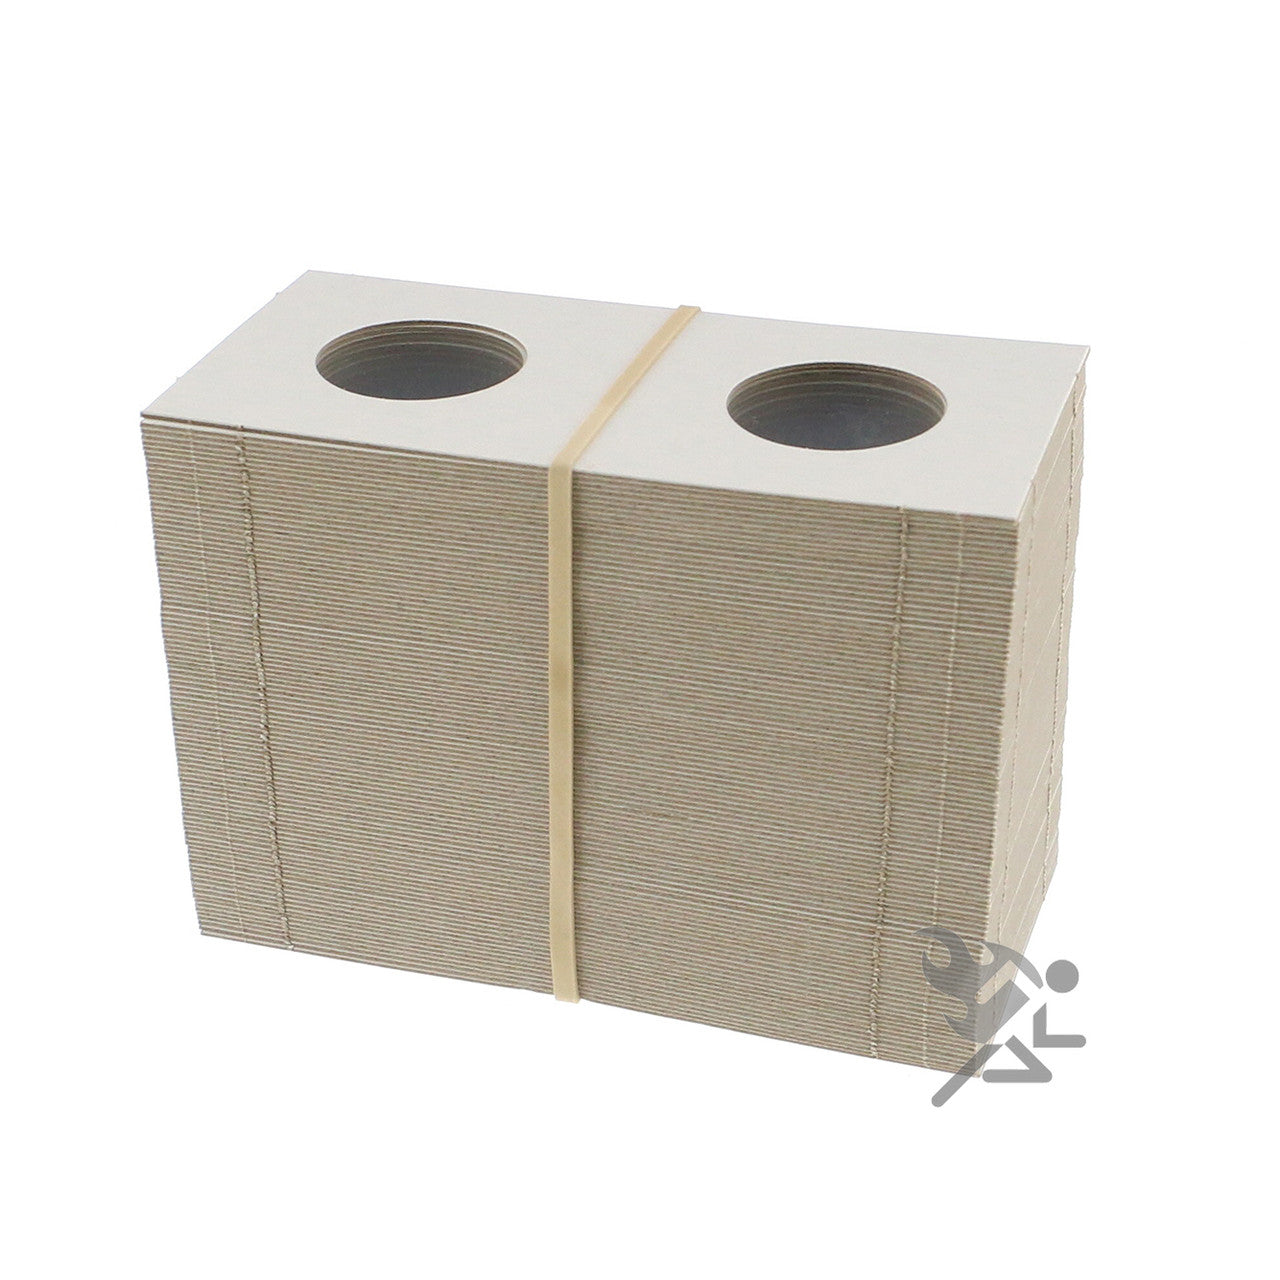 Cardboard & Mylar 2x2 Quarter Coin Flips Qty: 100